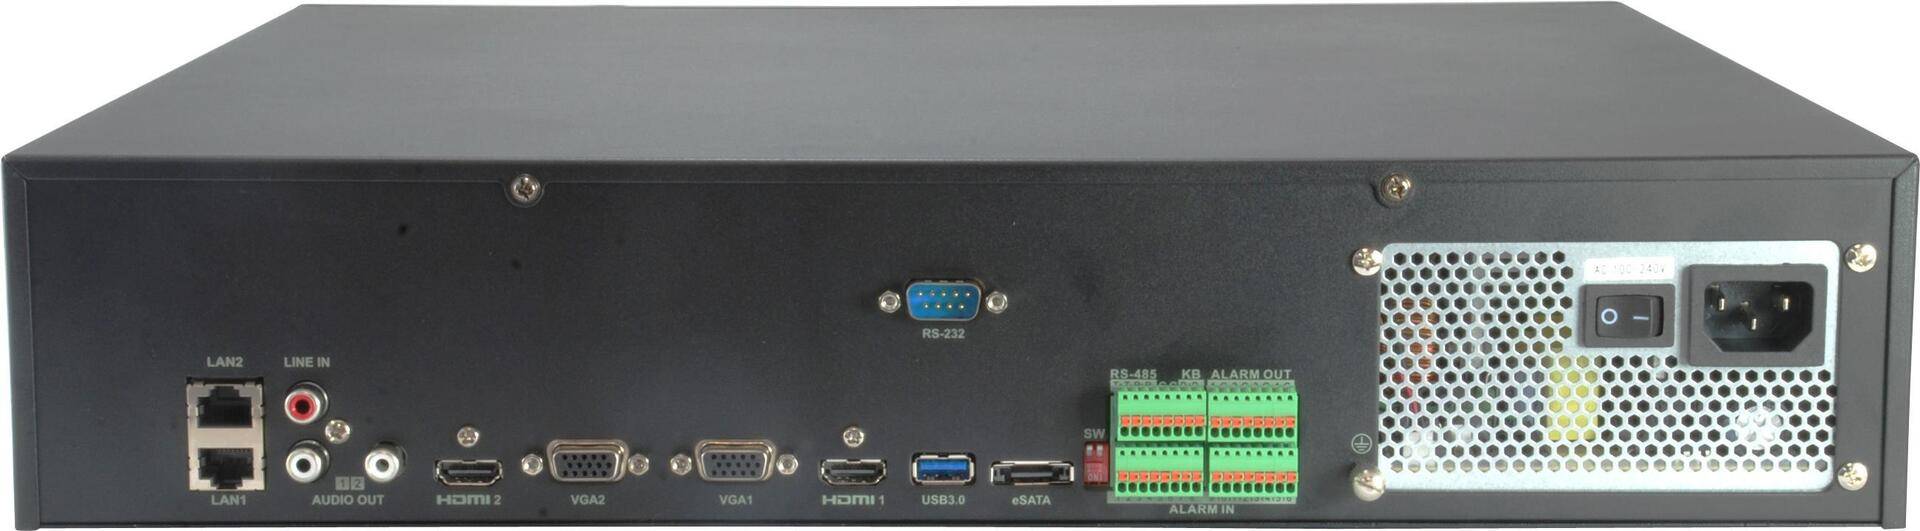 LevelOne GEMINI series NVR-0764 - NVR - 64 Kanäle - netzwerkfähig - Rack - einbaufähig von LevelOne